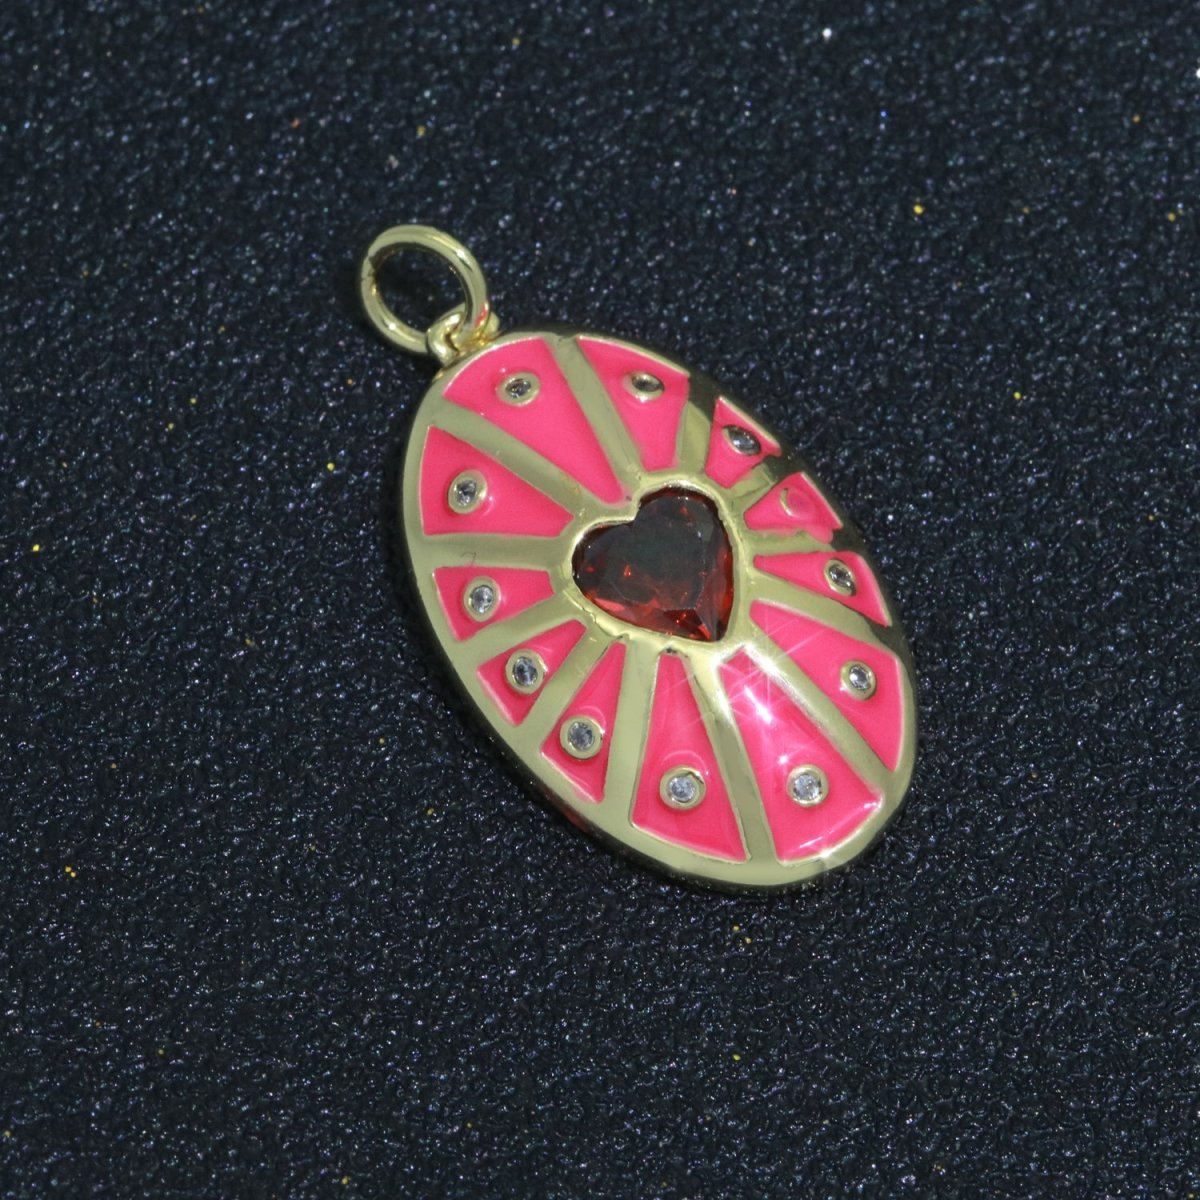 Vintage Shield Pendant 14k Gold Filled Heart Cz Stone Enamel Medallion Charm for Jewelry Making Supply M-701 - M-710 - DLUXCA